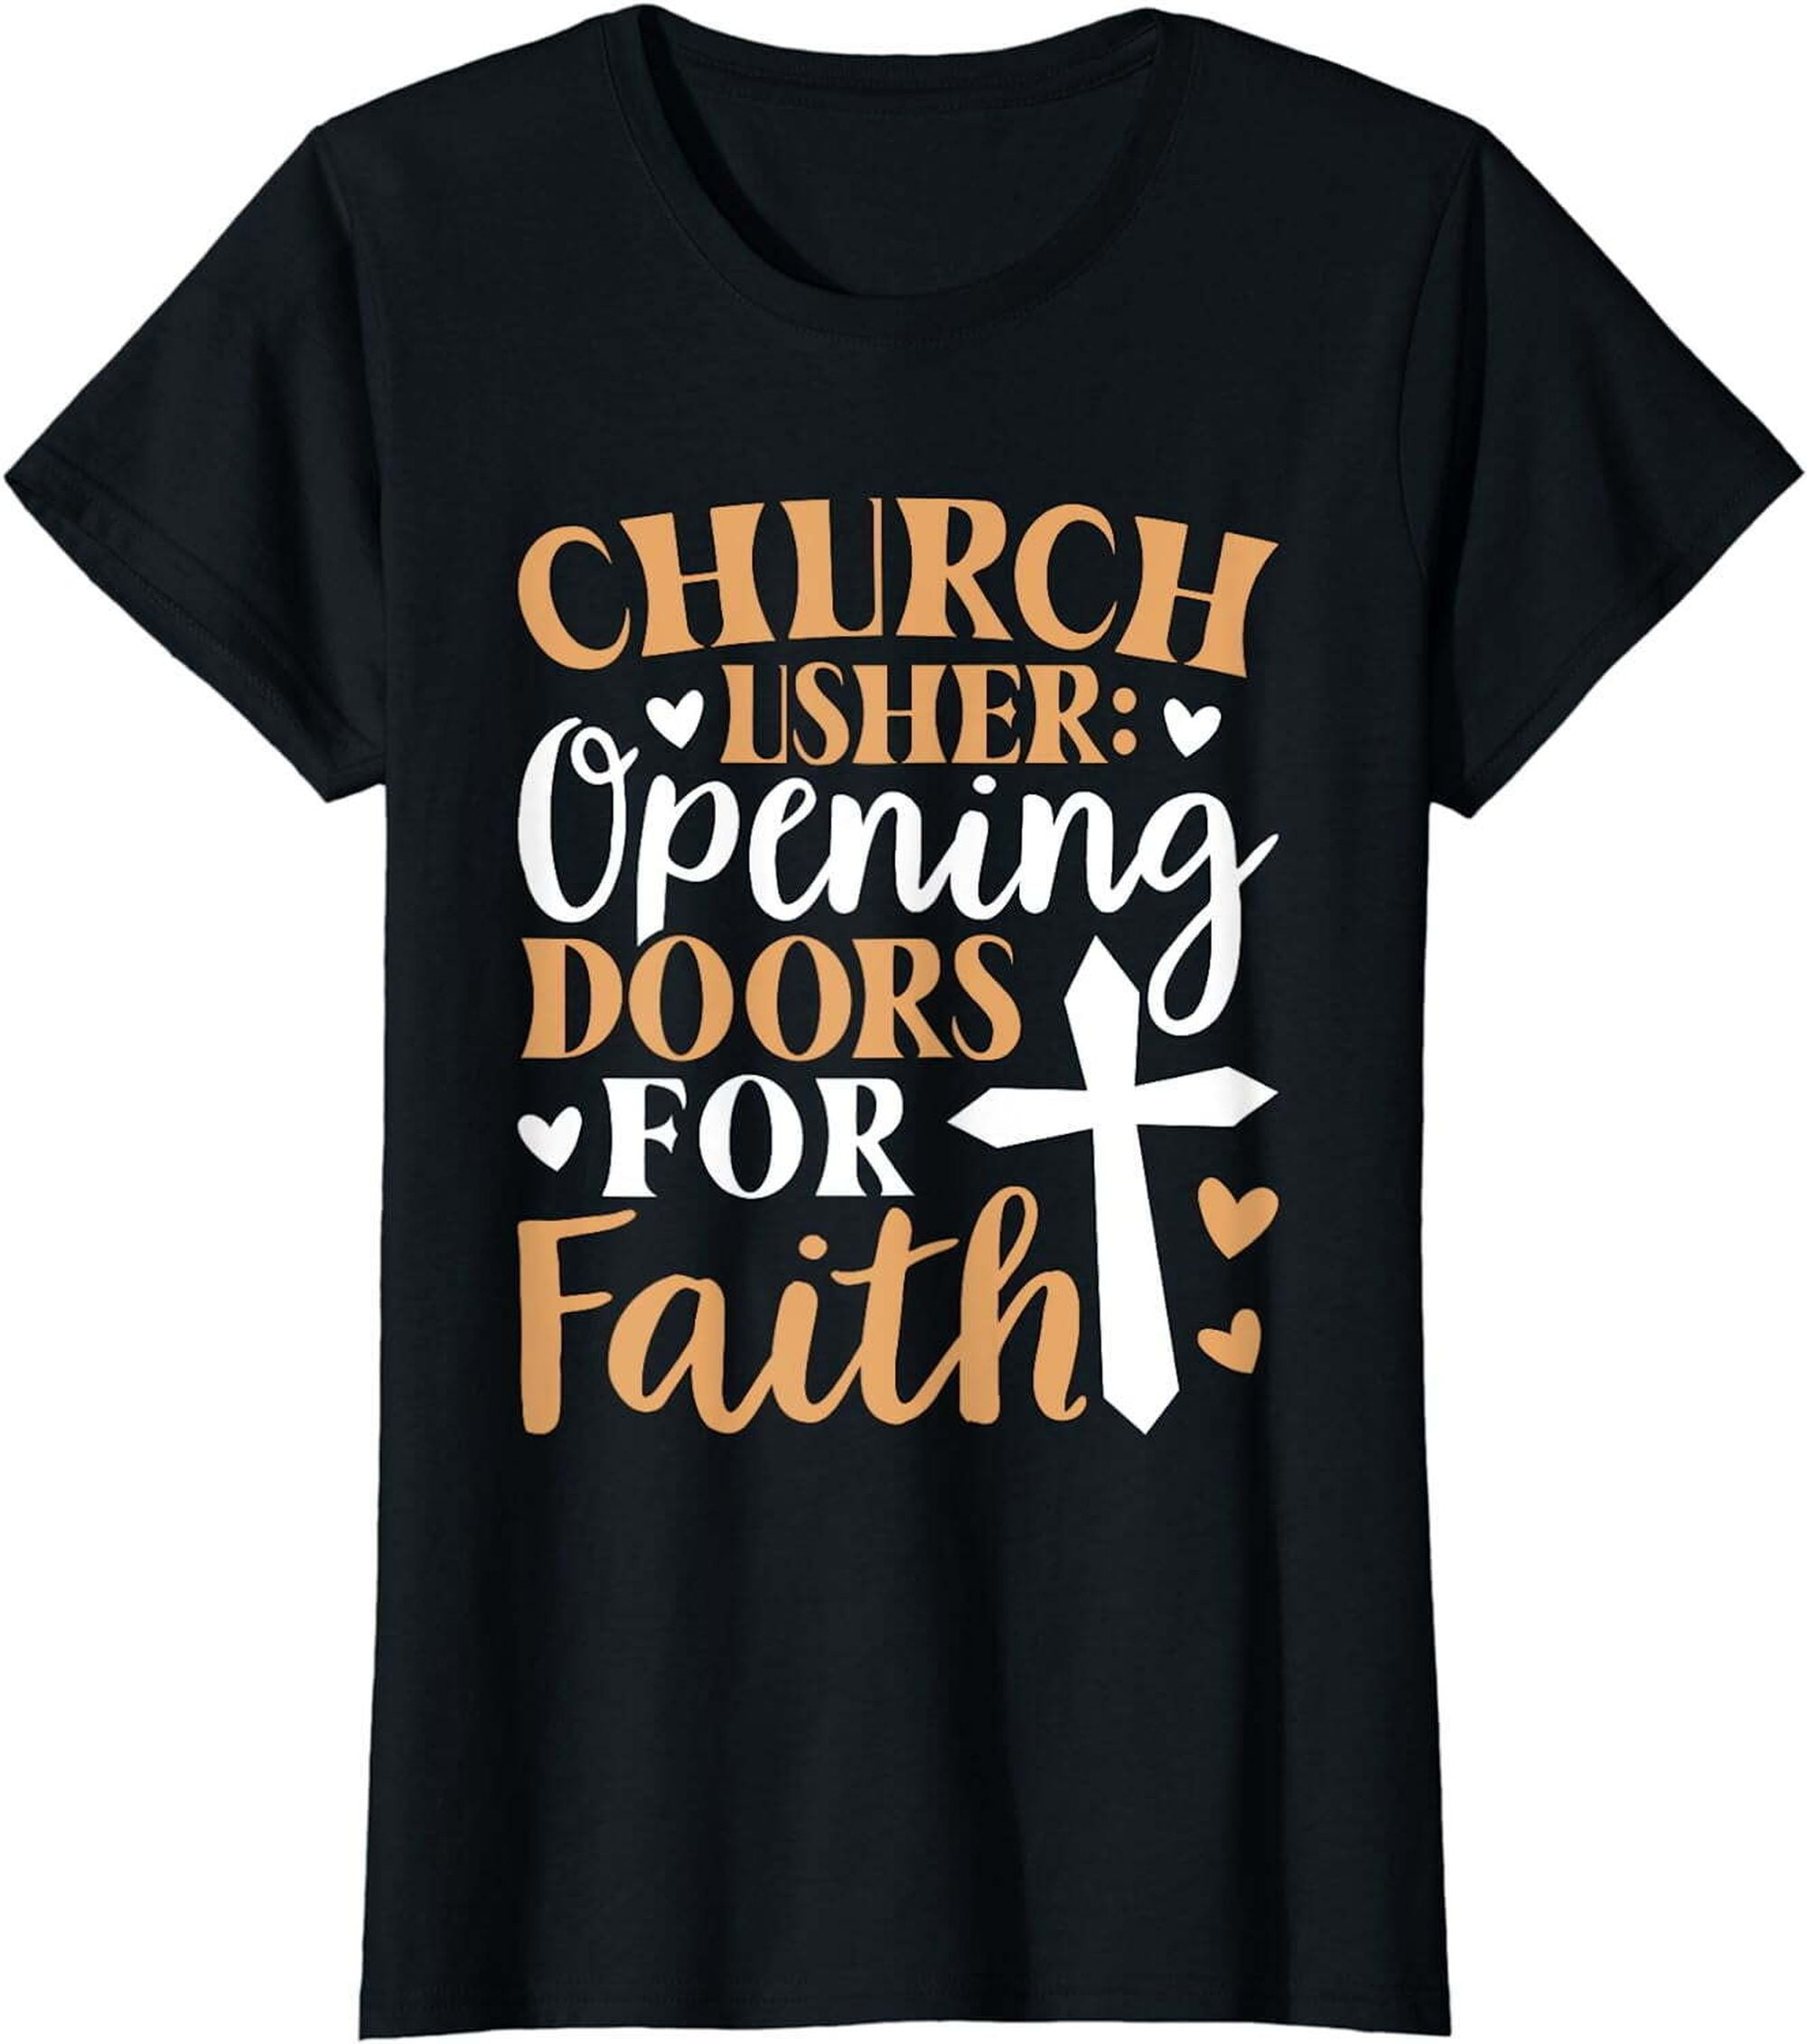 Finding Grace Through the Cross - Catholic T-Shirt for the Faithful ...